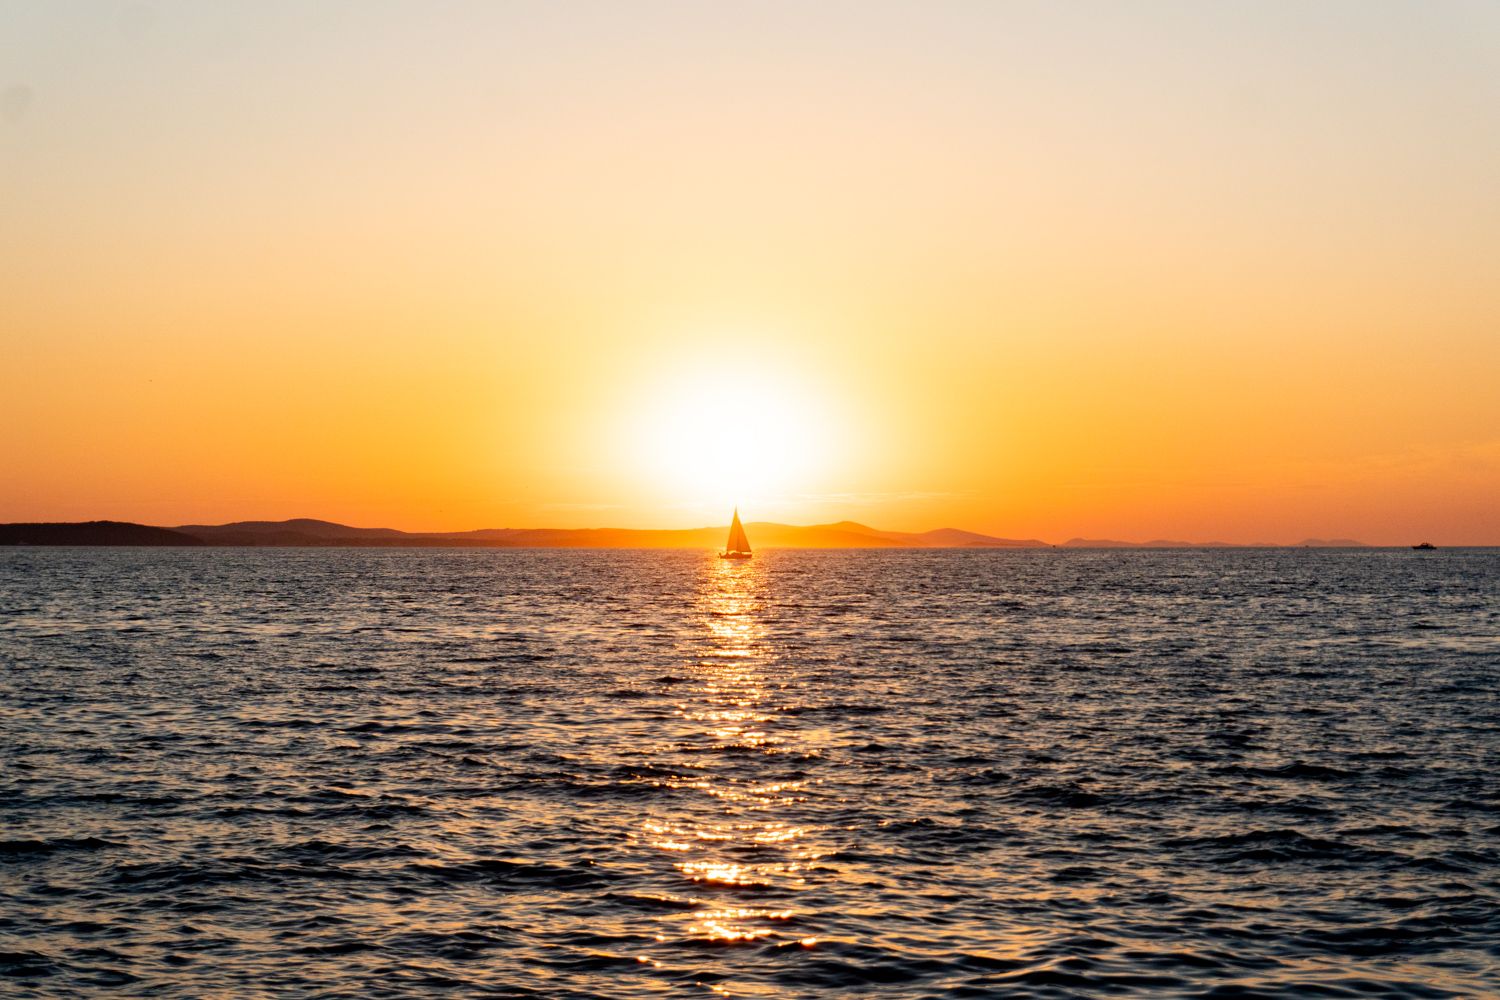 Sailboat at sunset in Zadar, Croatia